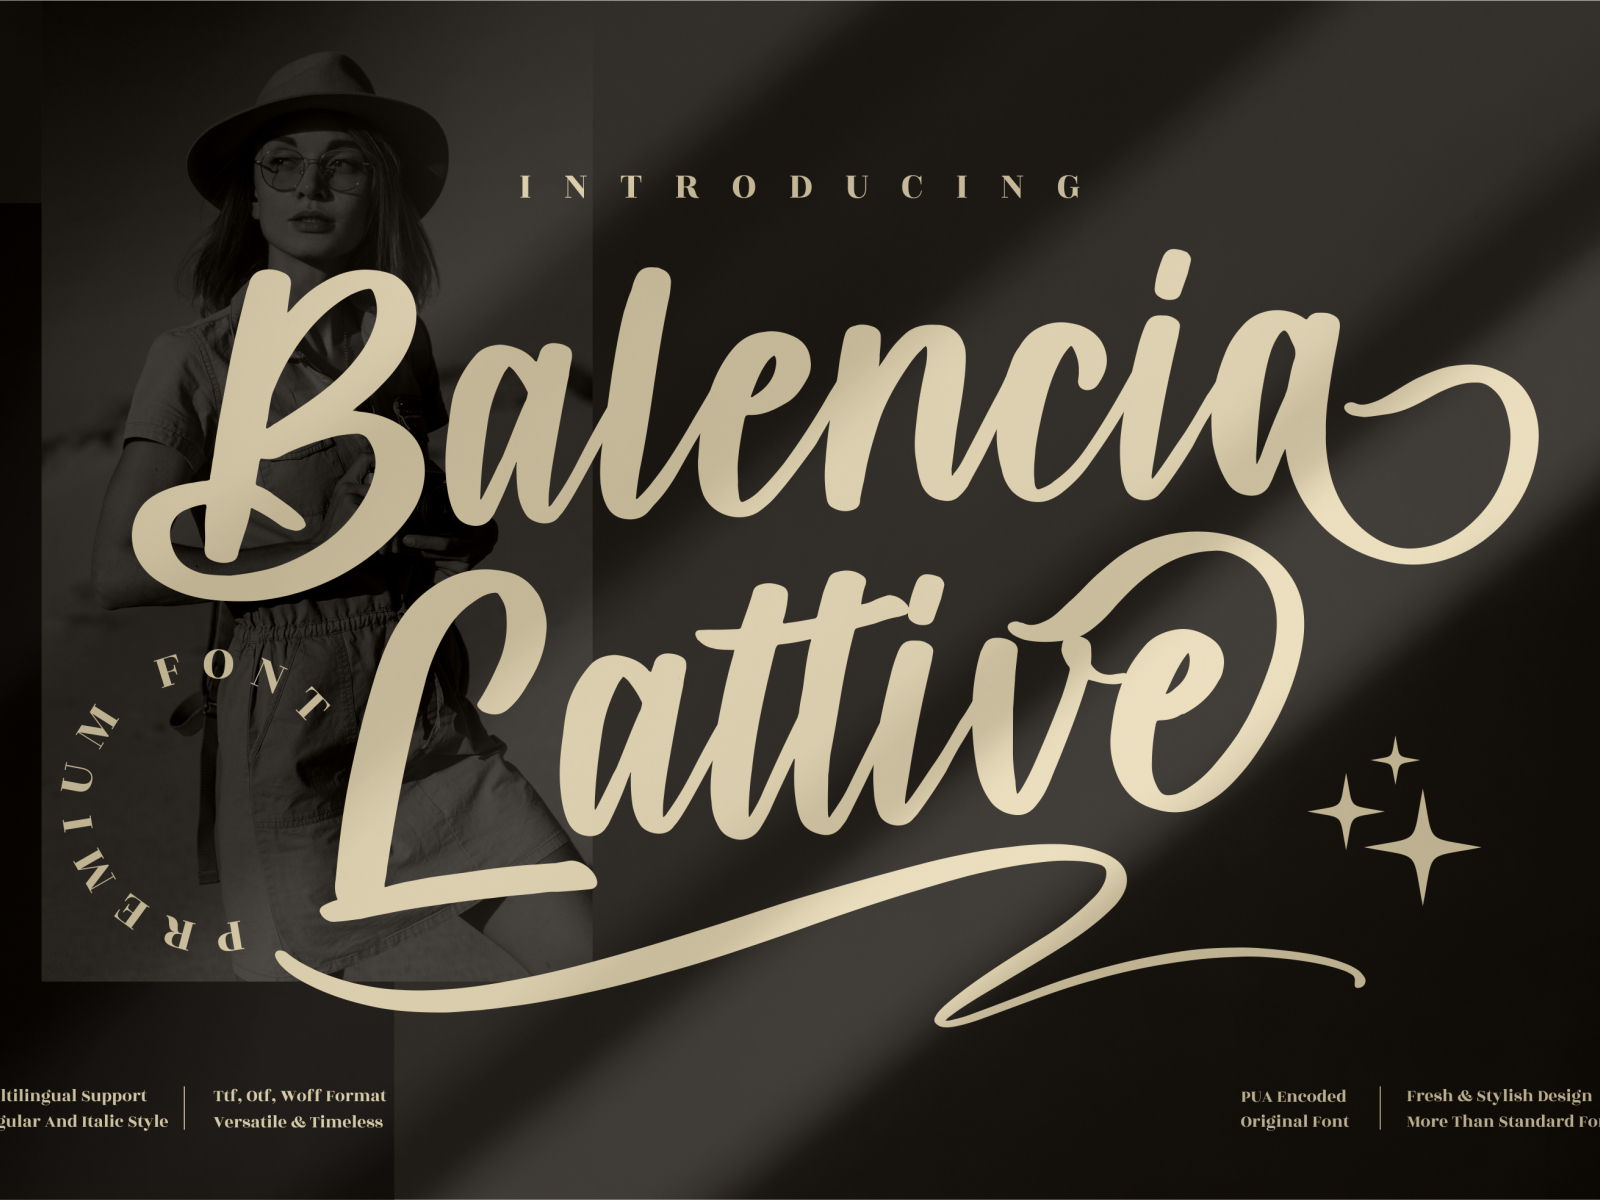 Balencia Lattive - Signature Script Font by Perspectype Studio on Dribbble